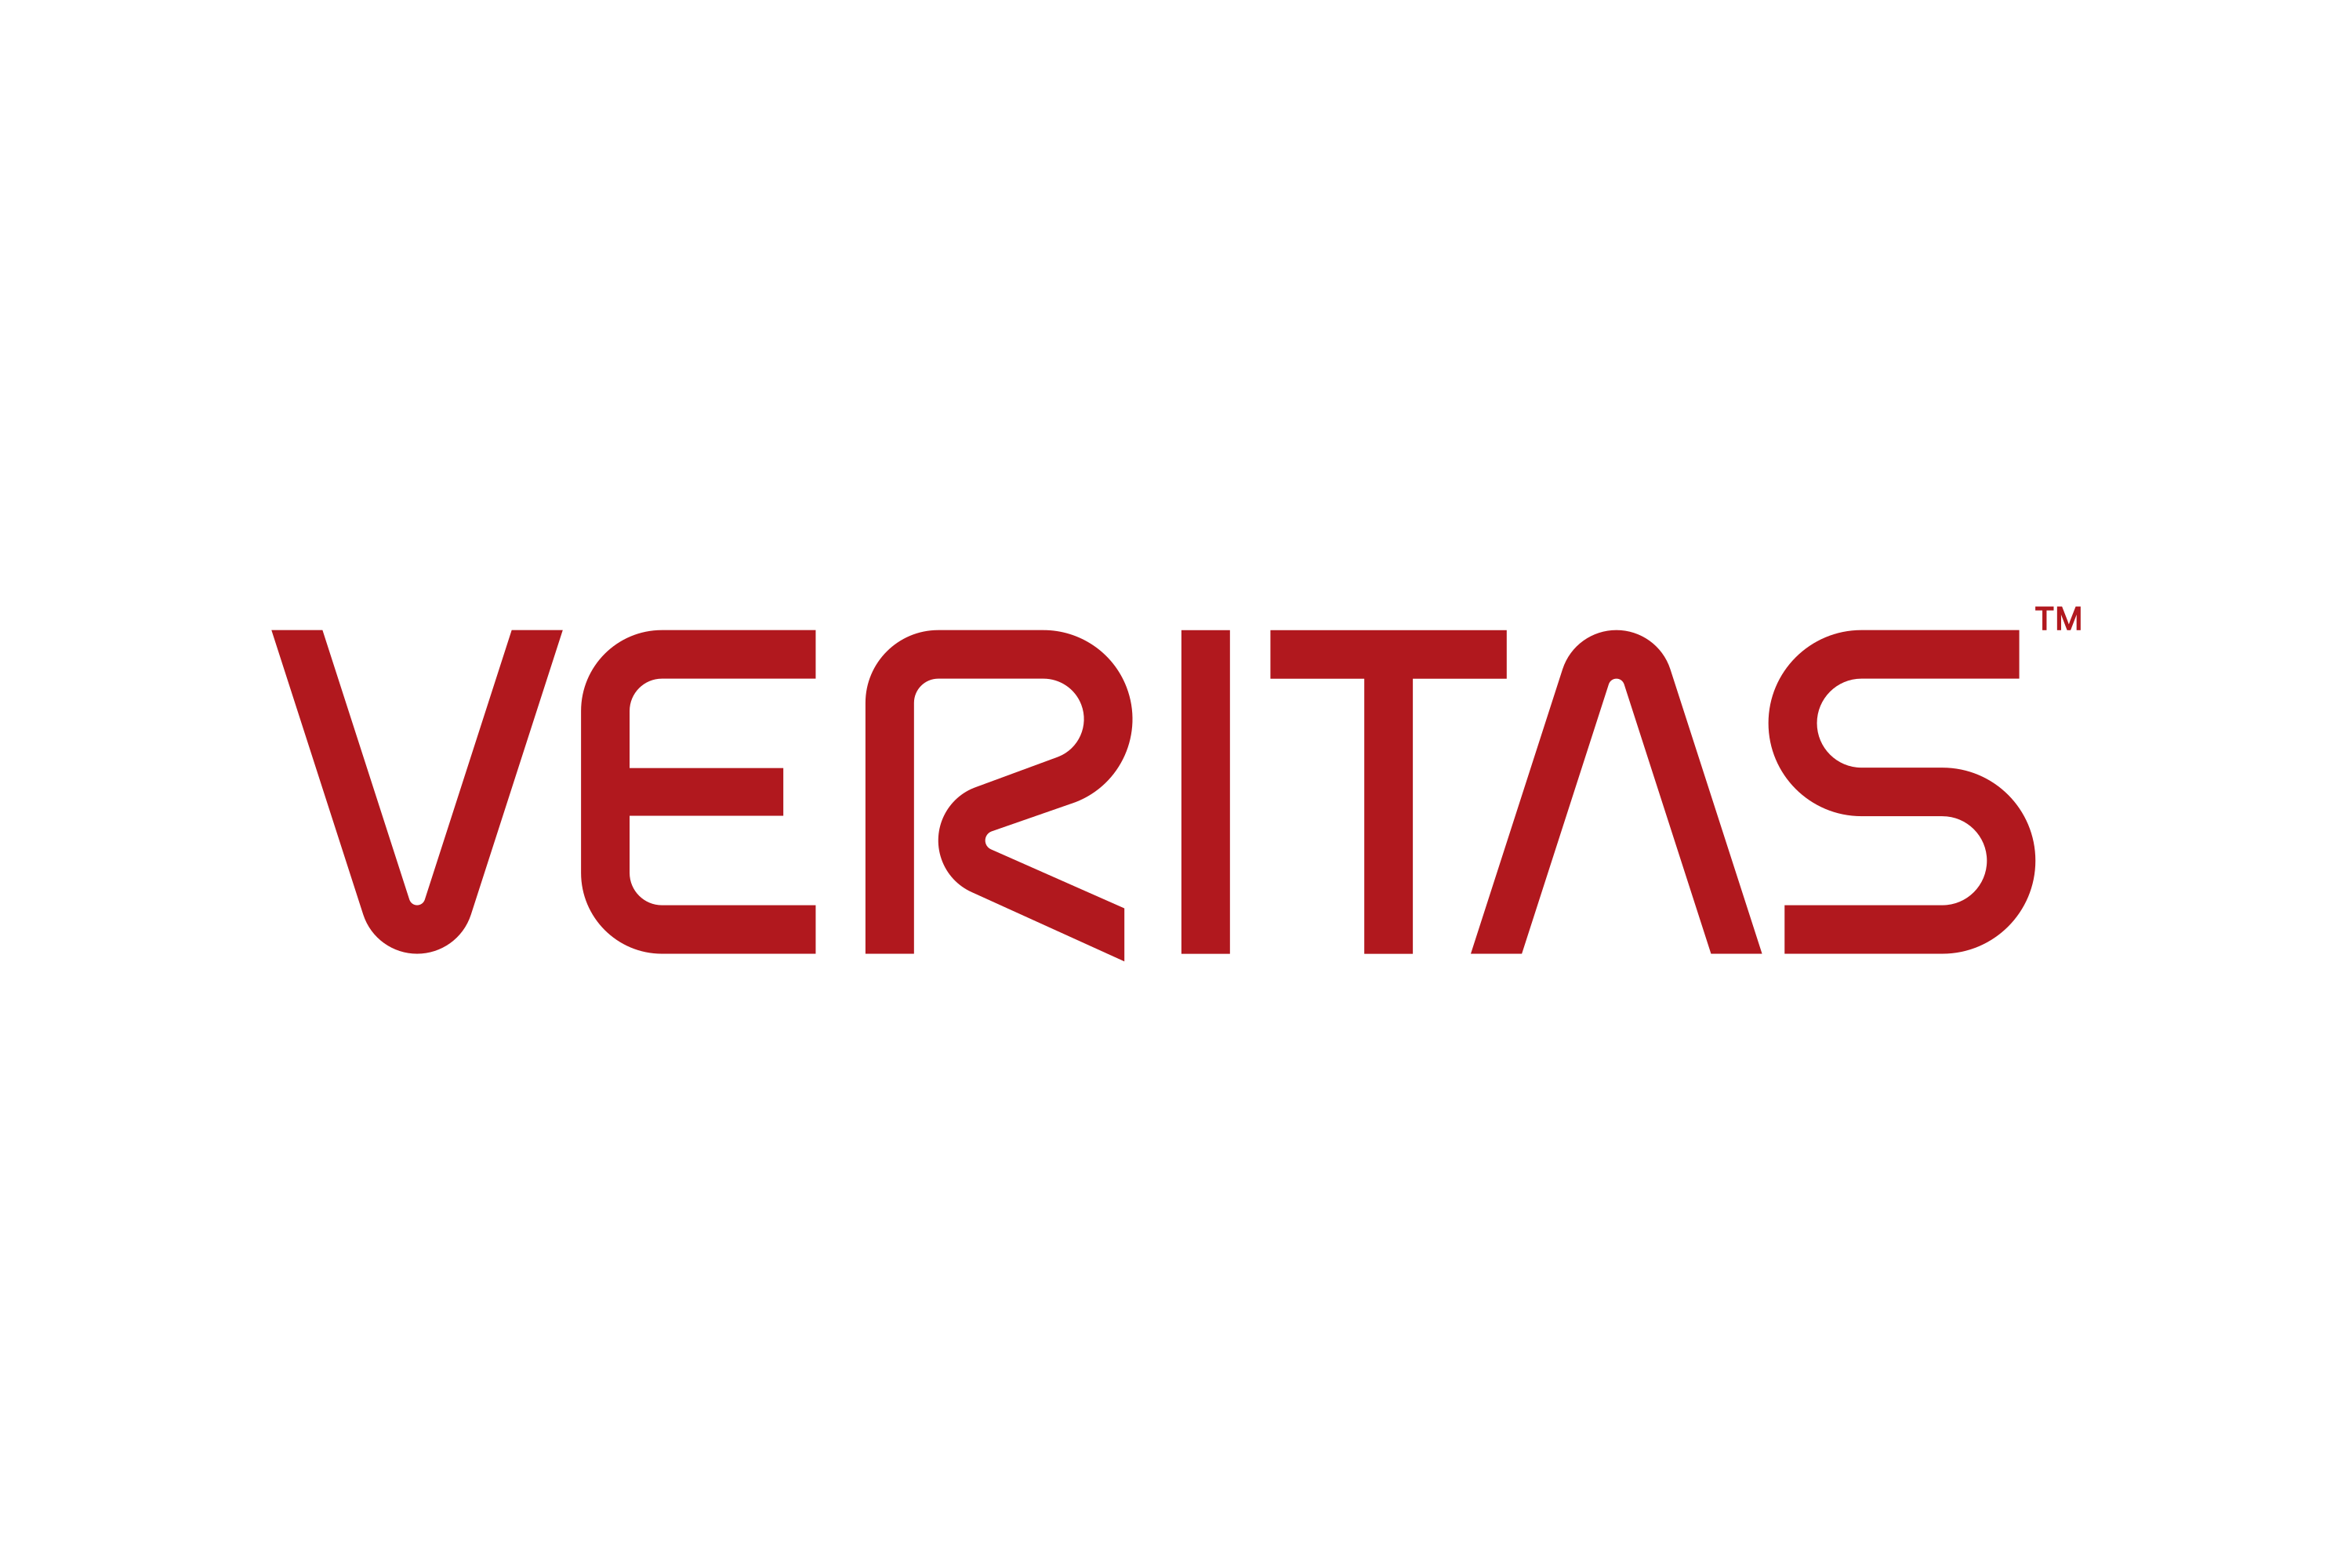 Bureau Veritas logo Download png